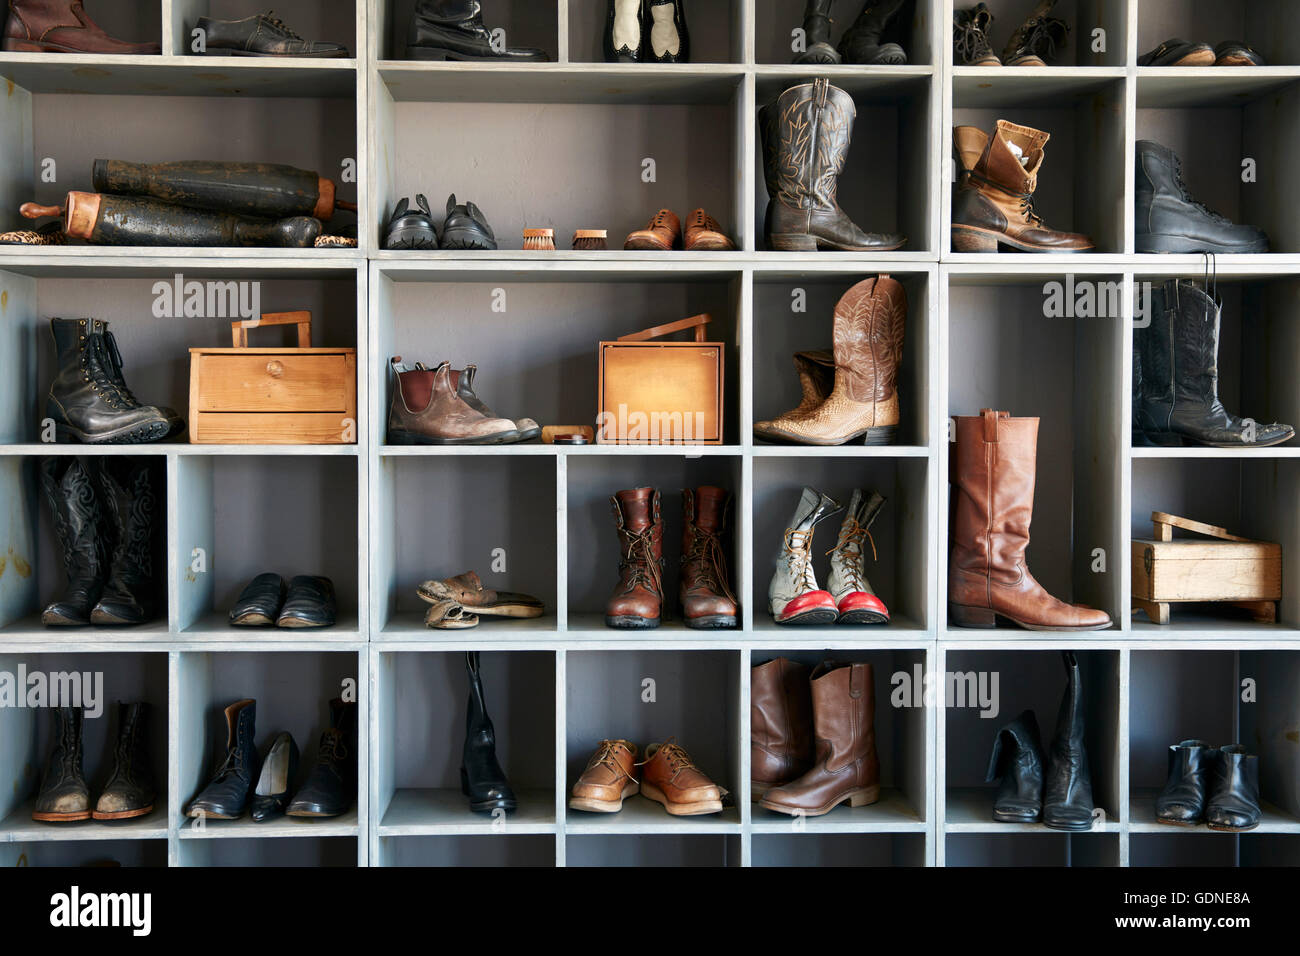 Estantes de zapatos fotografías e imágenes de alta resolución - Alamy